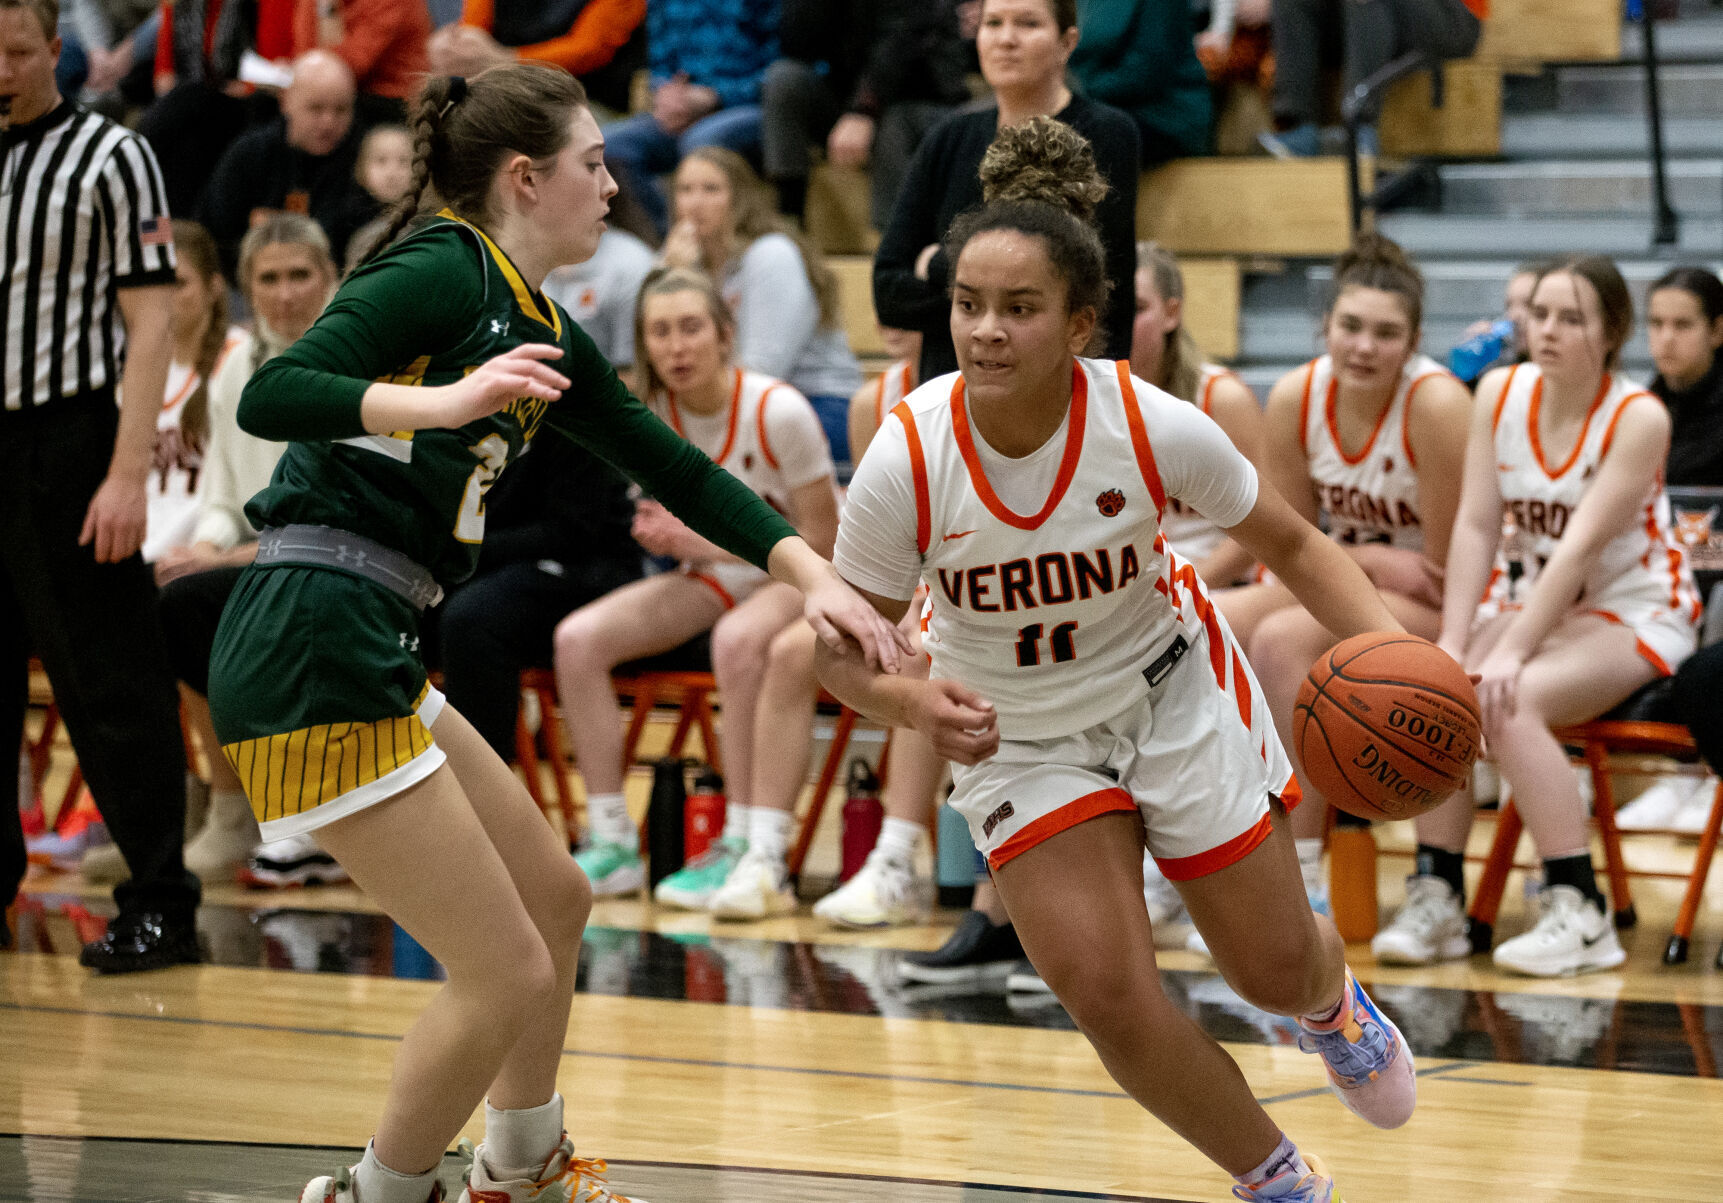 Reagan Briggs leads Verona girls basketball to victory to top high school sports stars